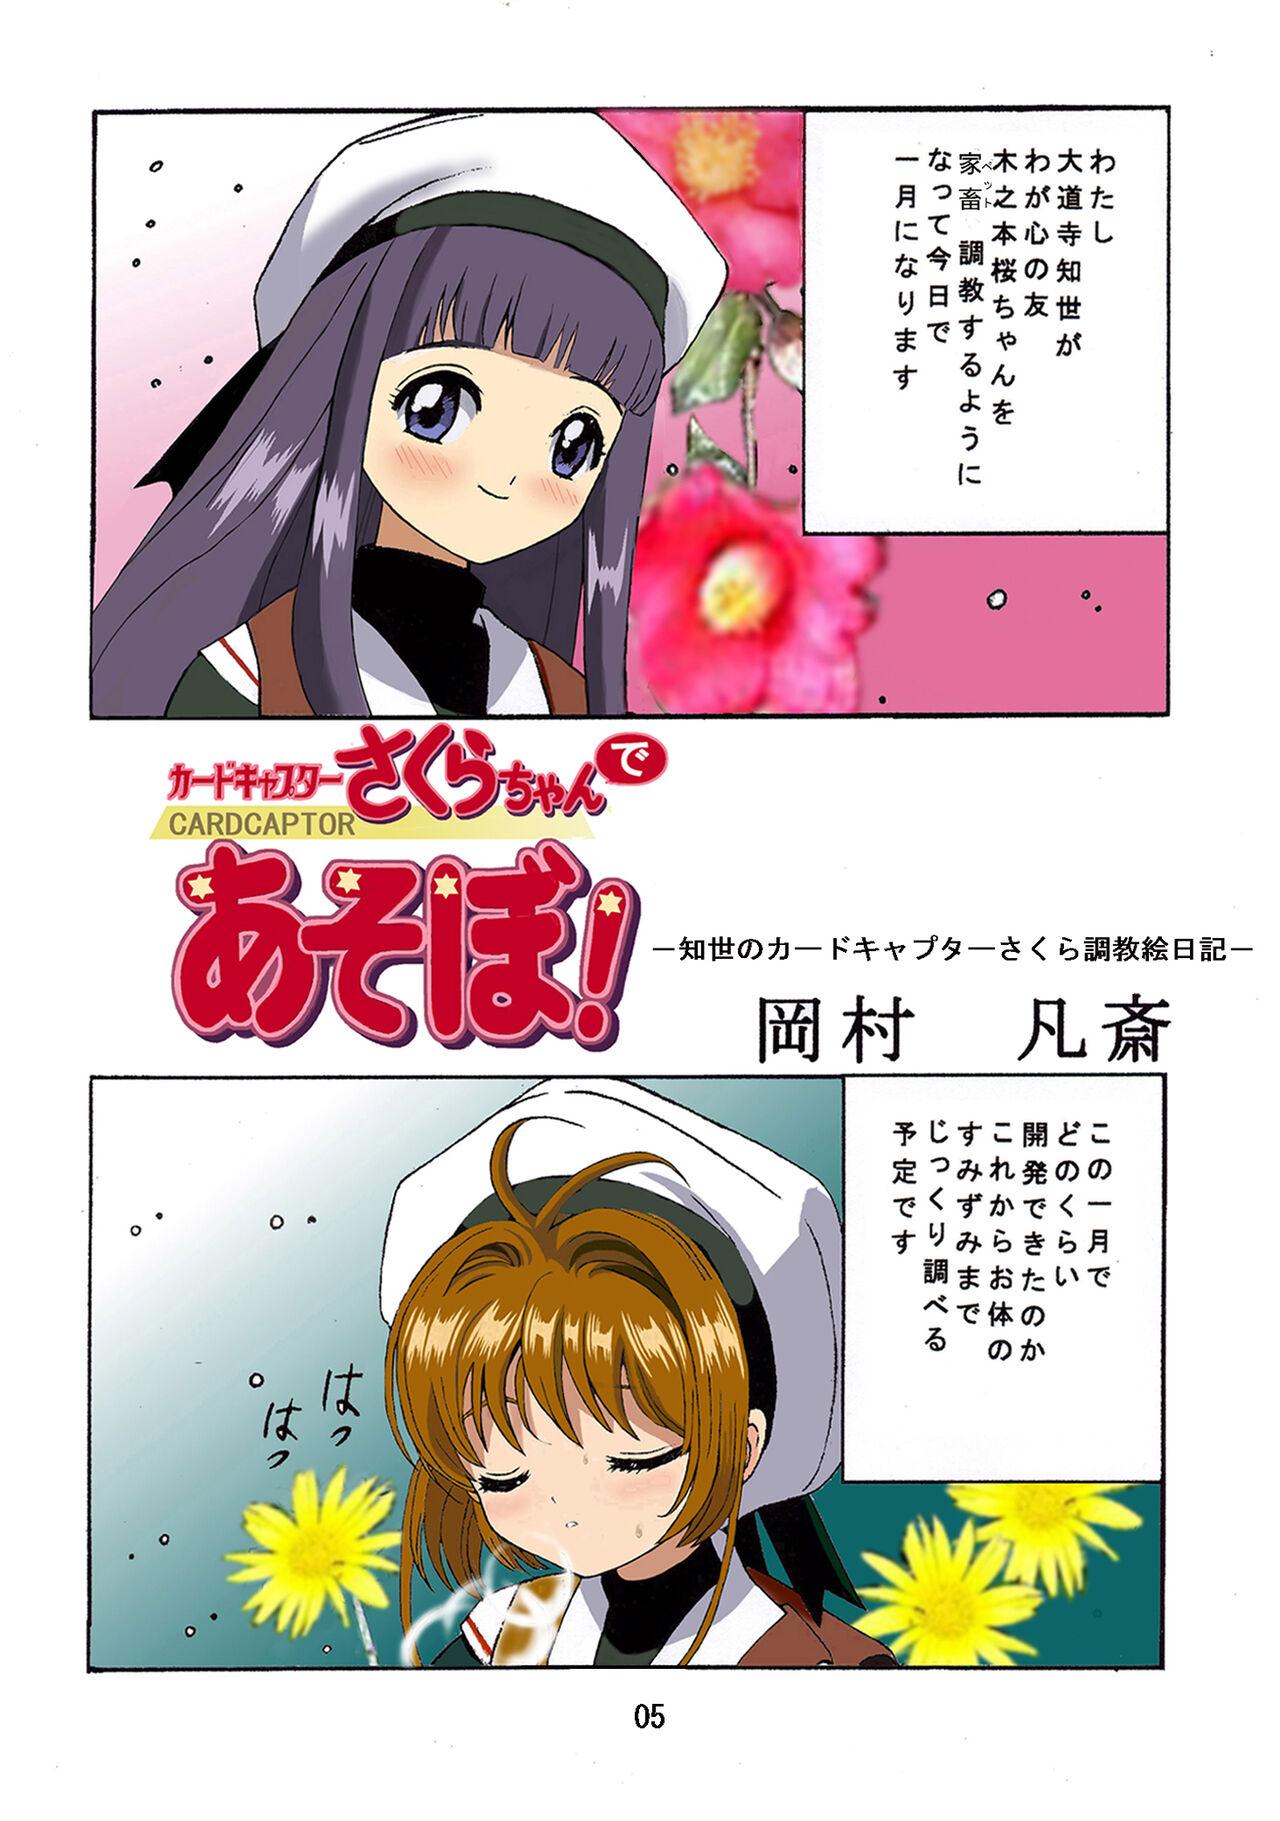 Casal Kuuronziyou 1 Full Color & TV Animation Ban - Cardcaptor sakura Sislovesme - Page 4